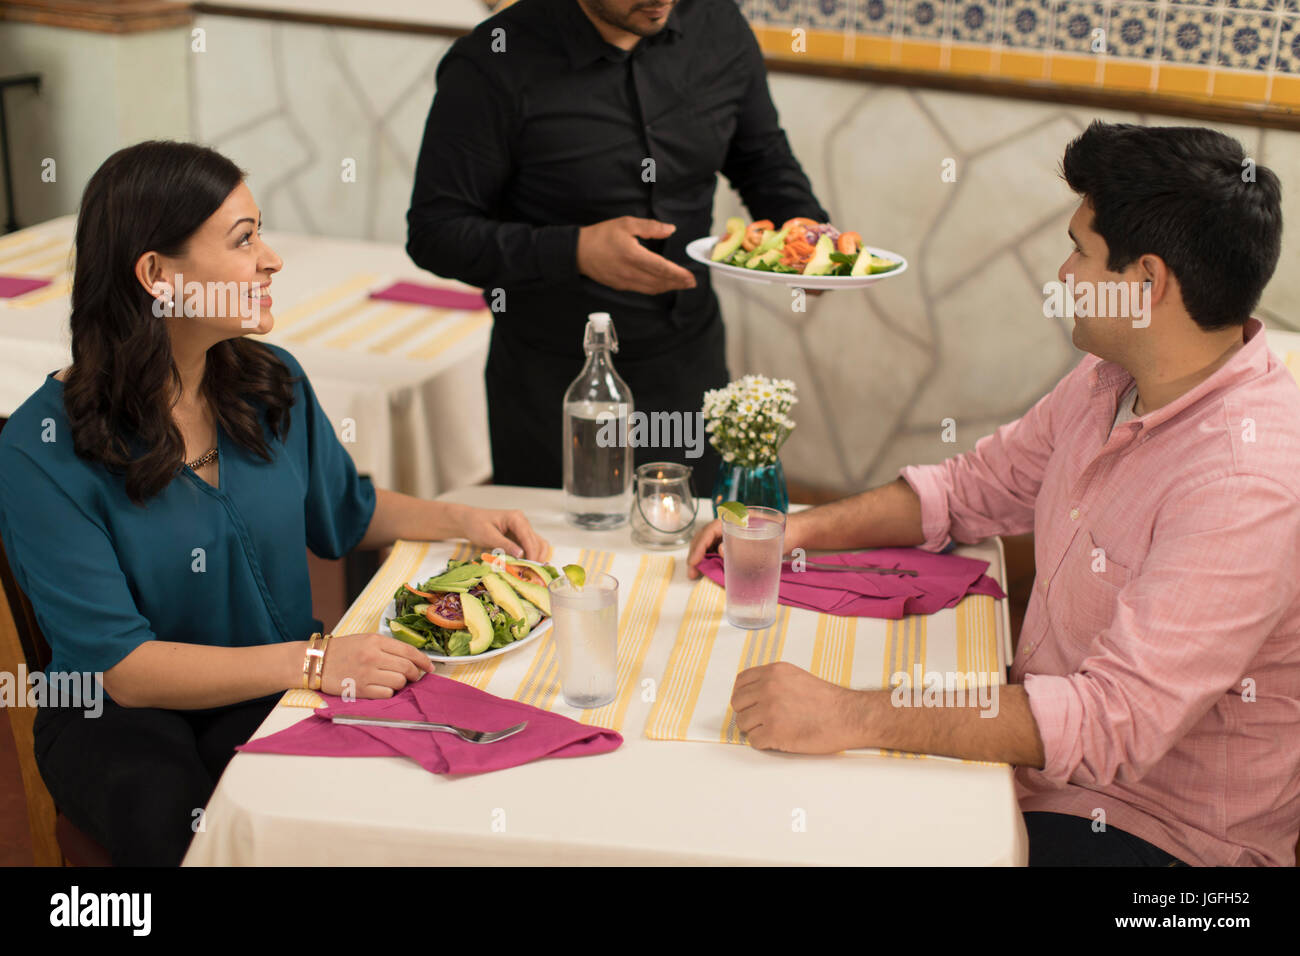 Waiter serving salad to Hispanic couple in restaurant Stock Photo